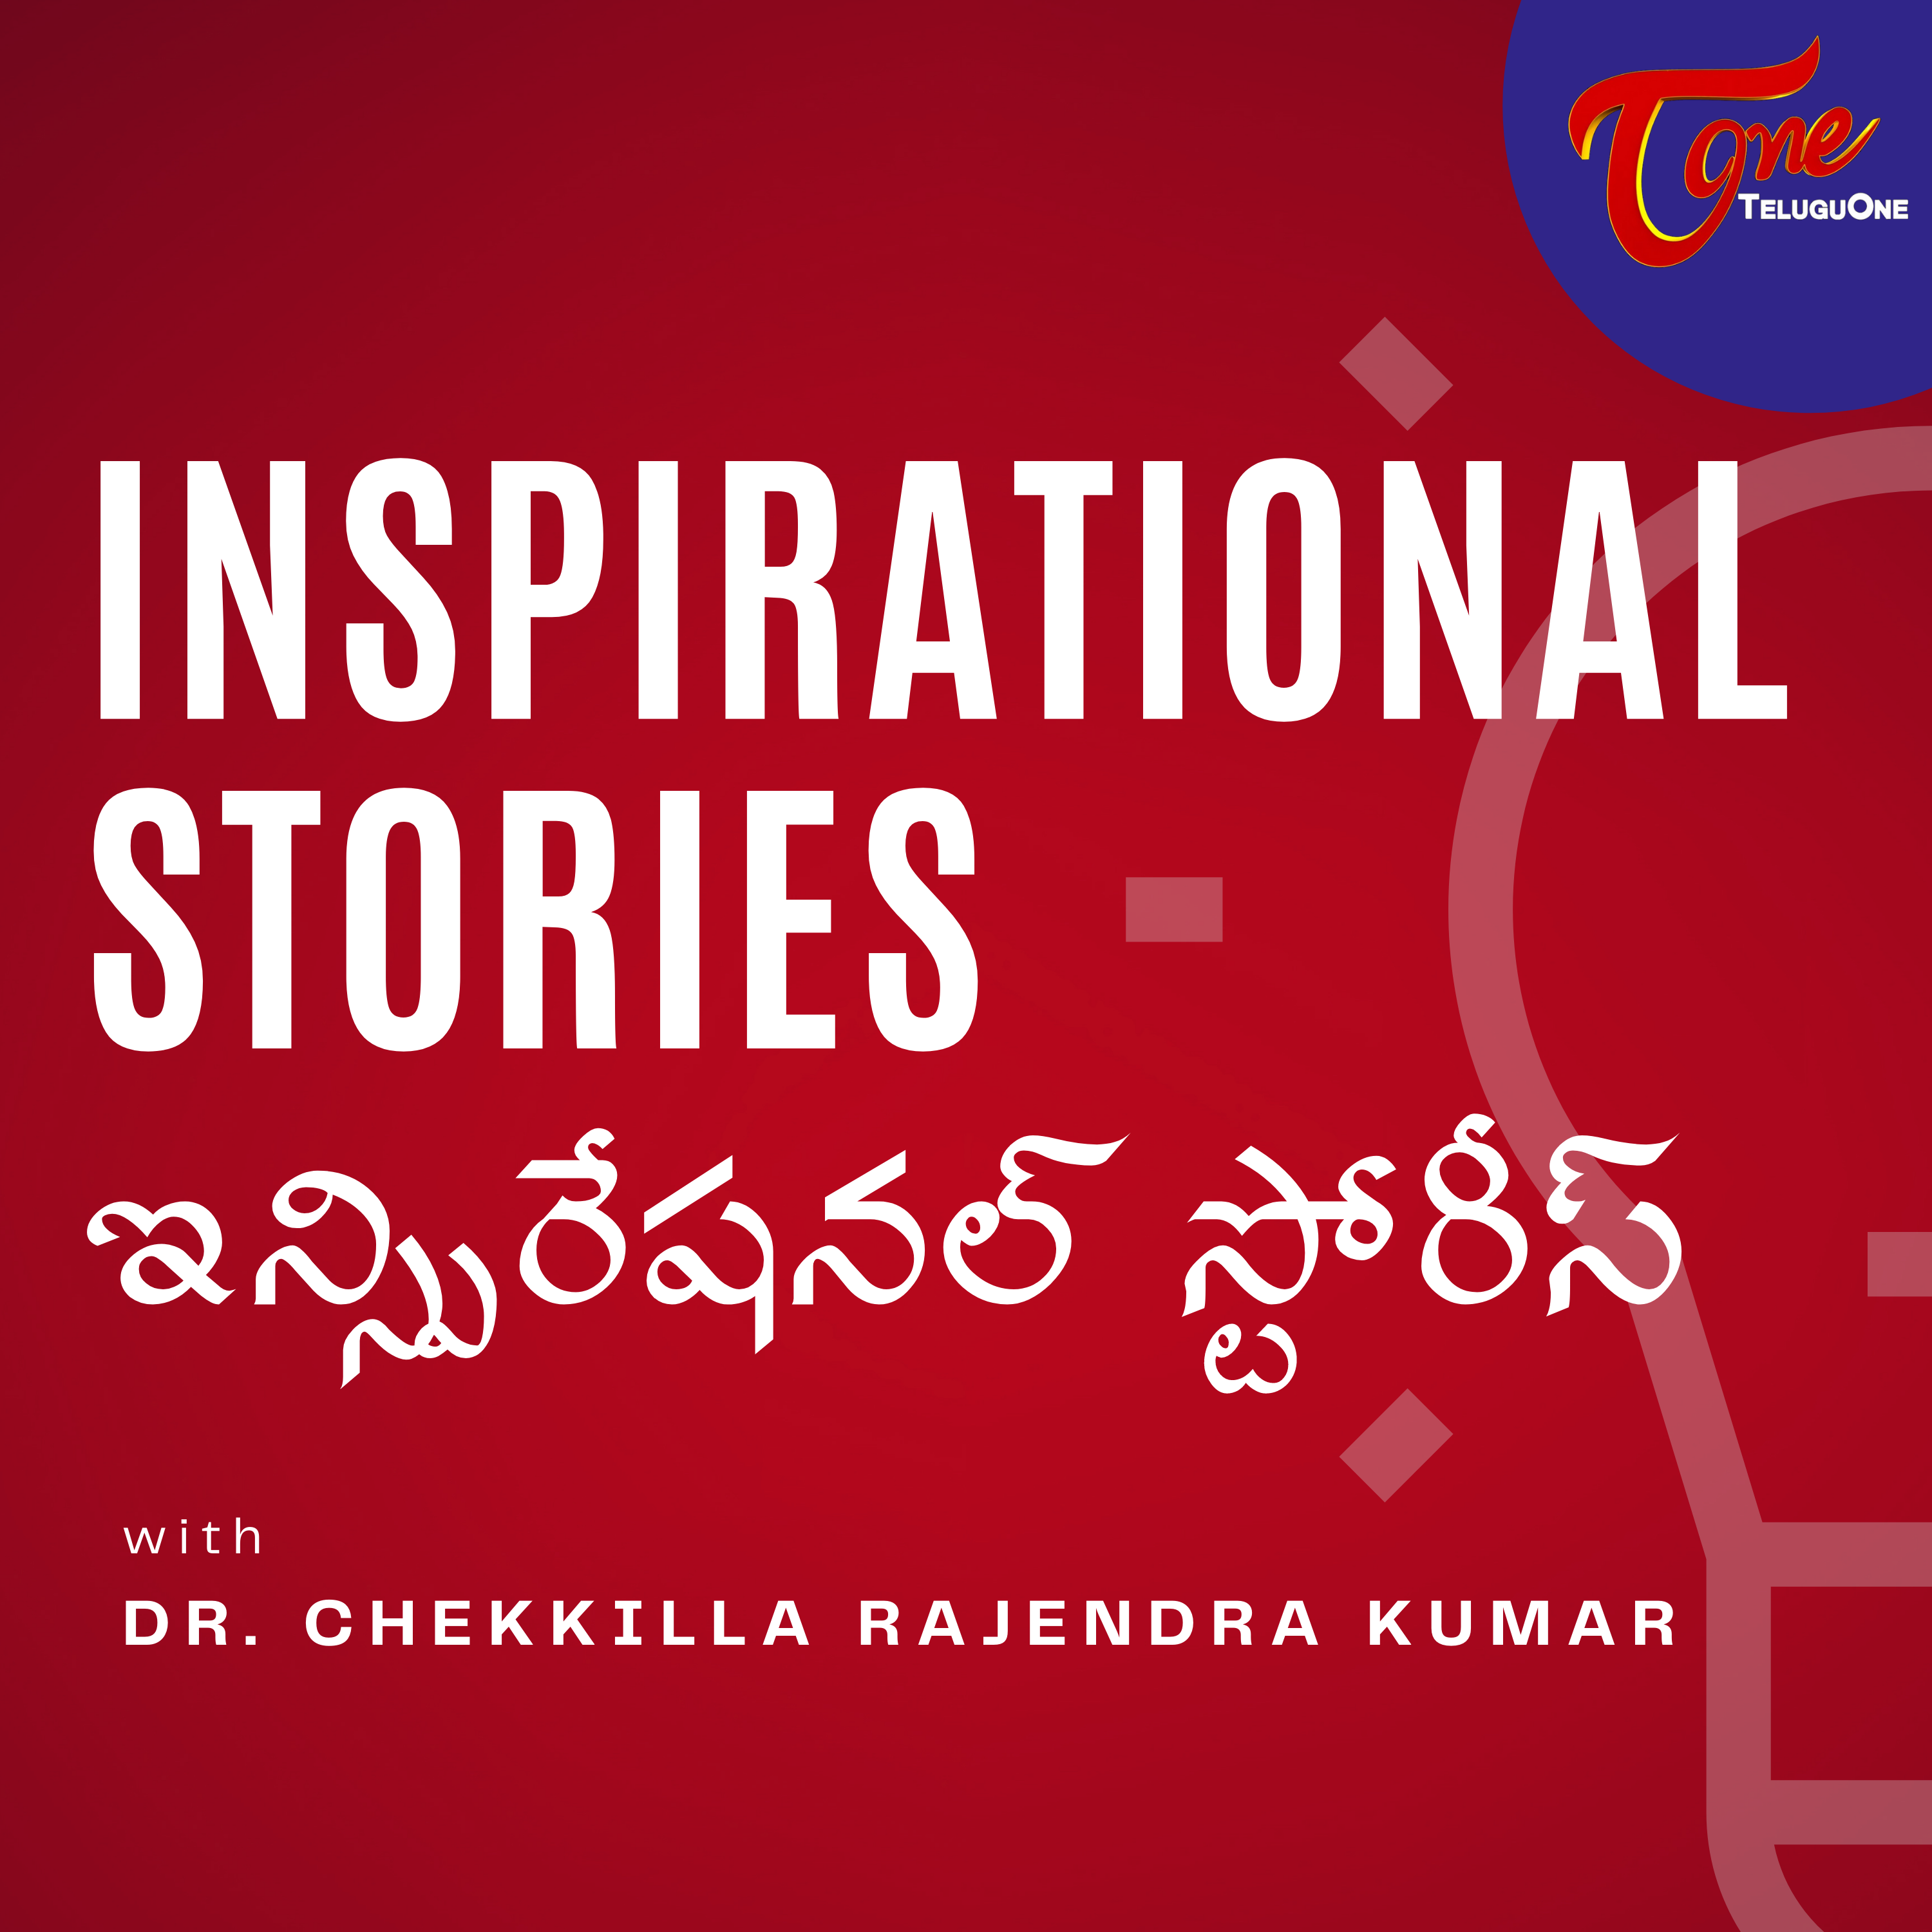 Ep. 14 మర 99 కలబ మబర... | Telugu Podcast